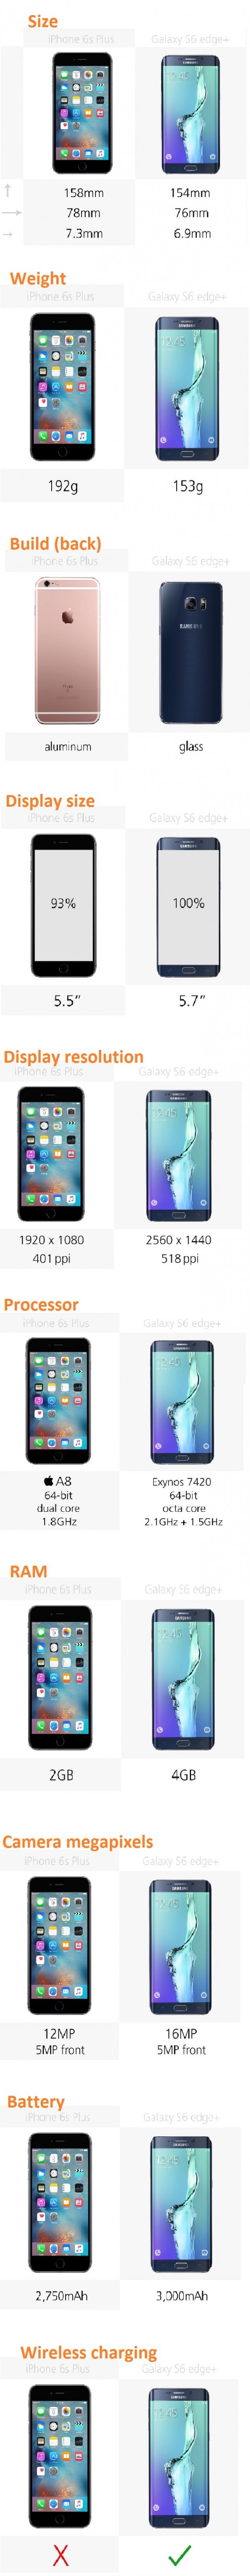 iphone vs Galaxy